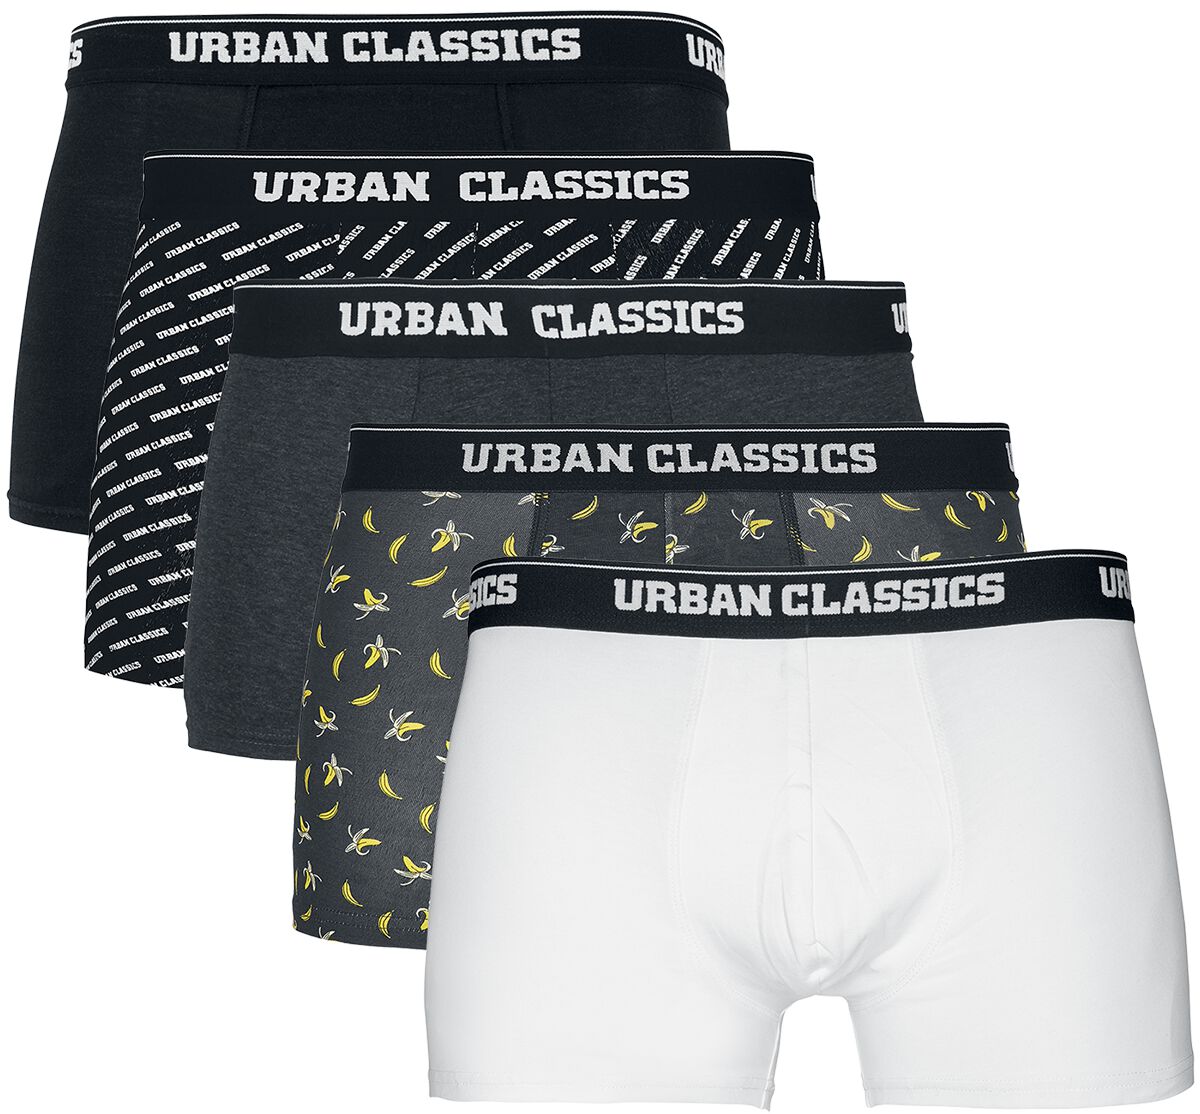 Urban Classics Boxer Shorts 5-Pack Boxershort-Set schwarz grau weiß in M